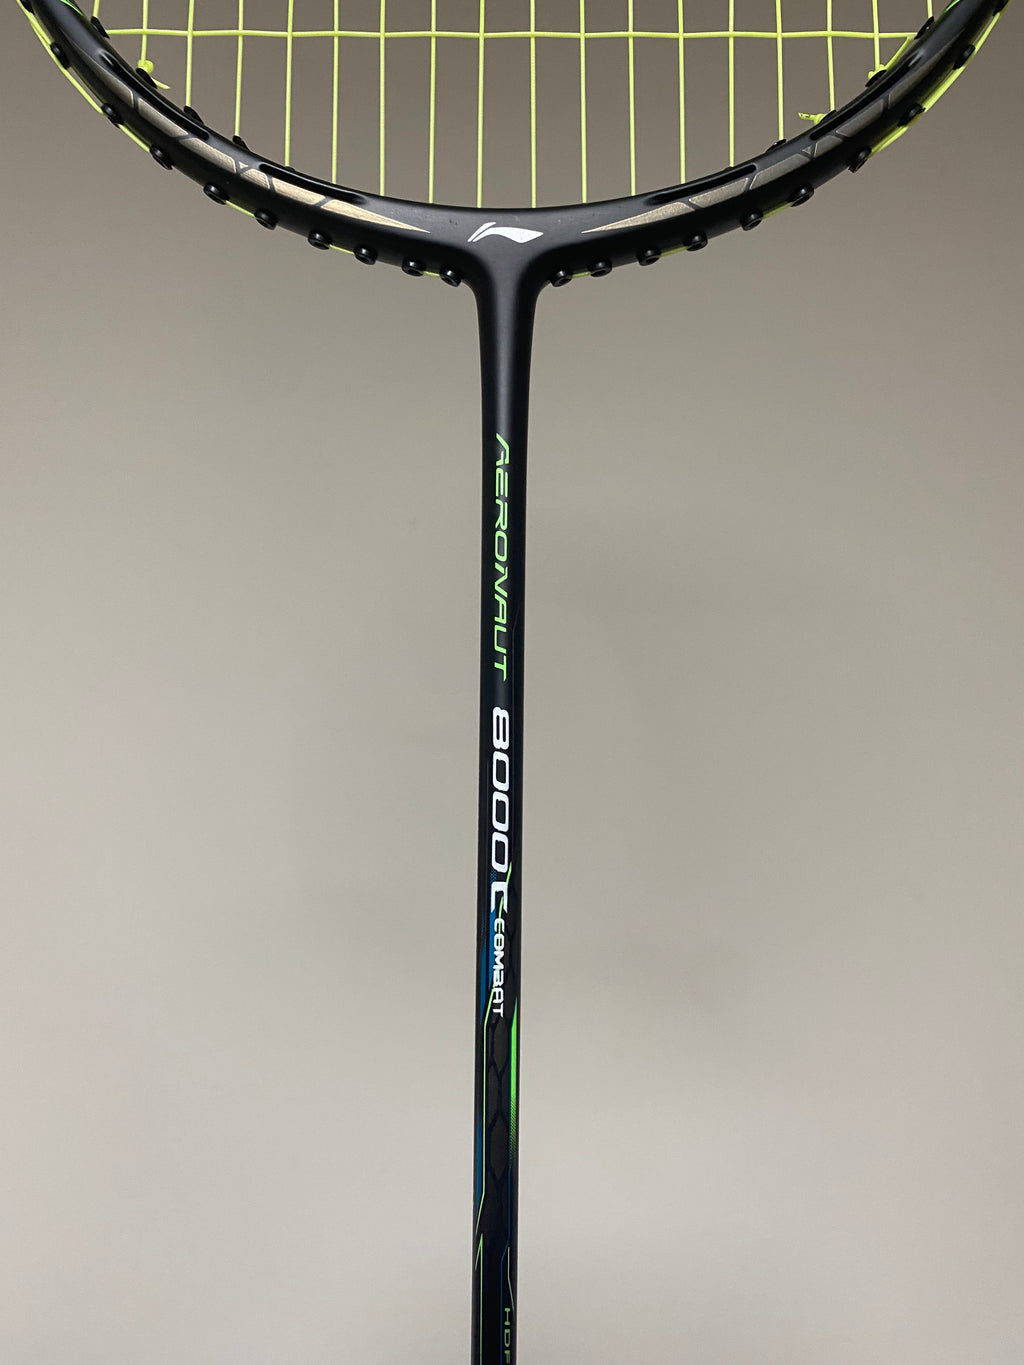 Li-Ning Aeronaut 8000 Combat Badminton Racket badminton racket review